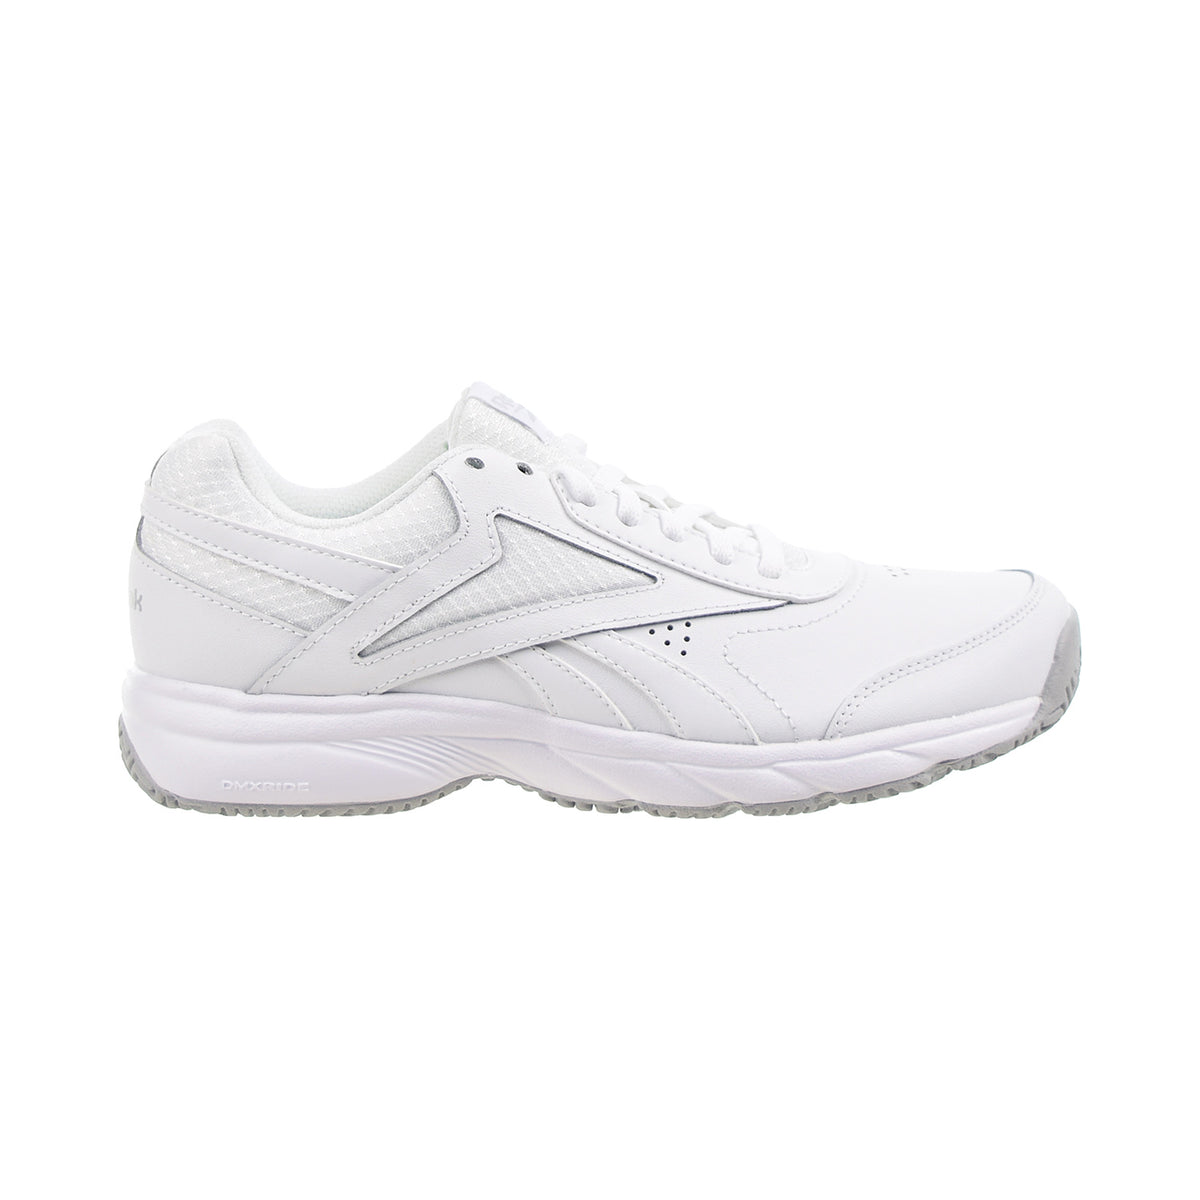 Reebok N Cushion 4.0 Women's Shoes Oil Slip Resistant White-Cold